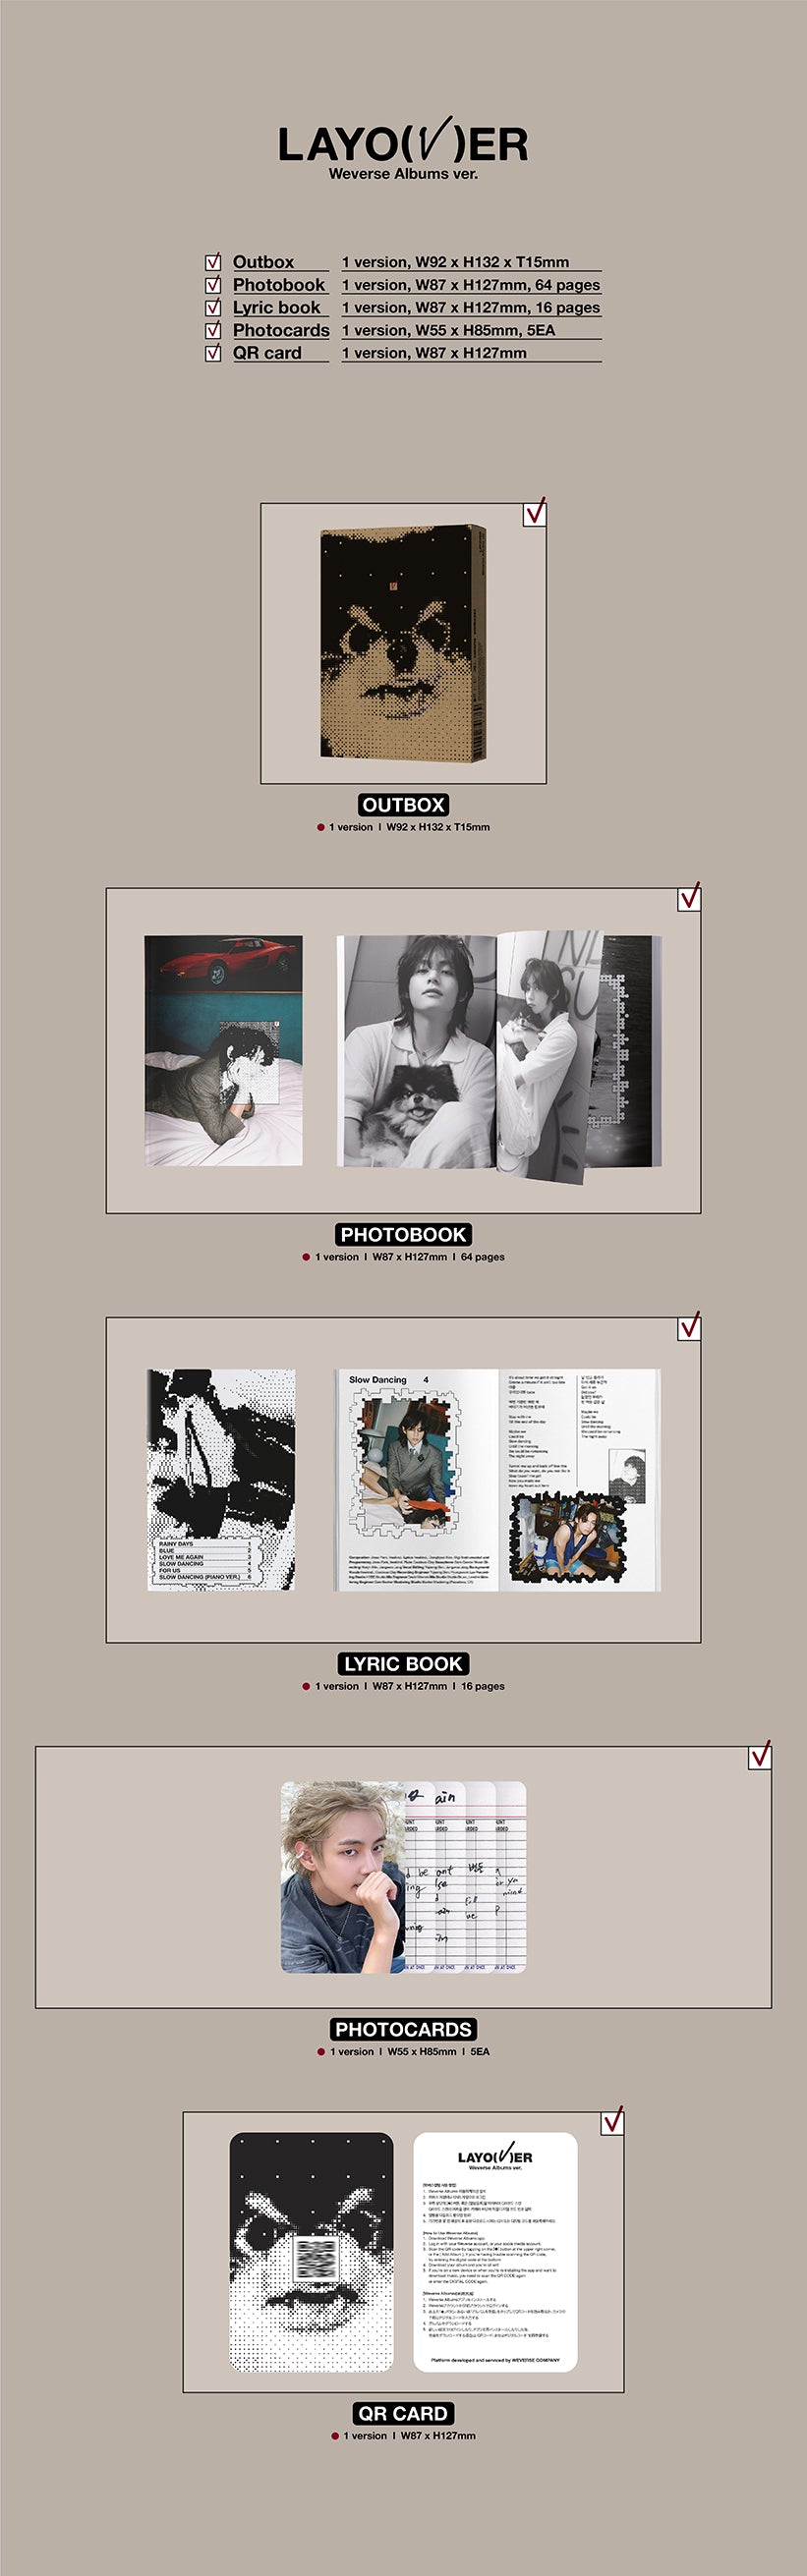 V (BTS) - [Layover] (Solo Album Photobook RANDOM Version) –